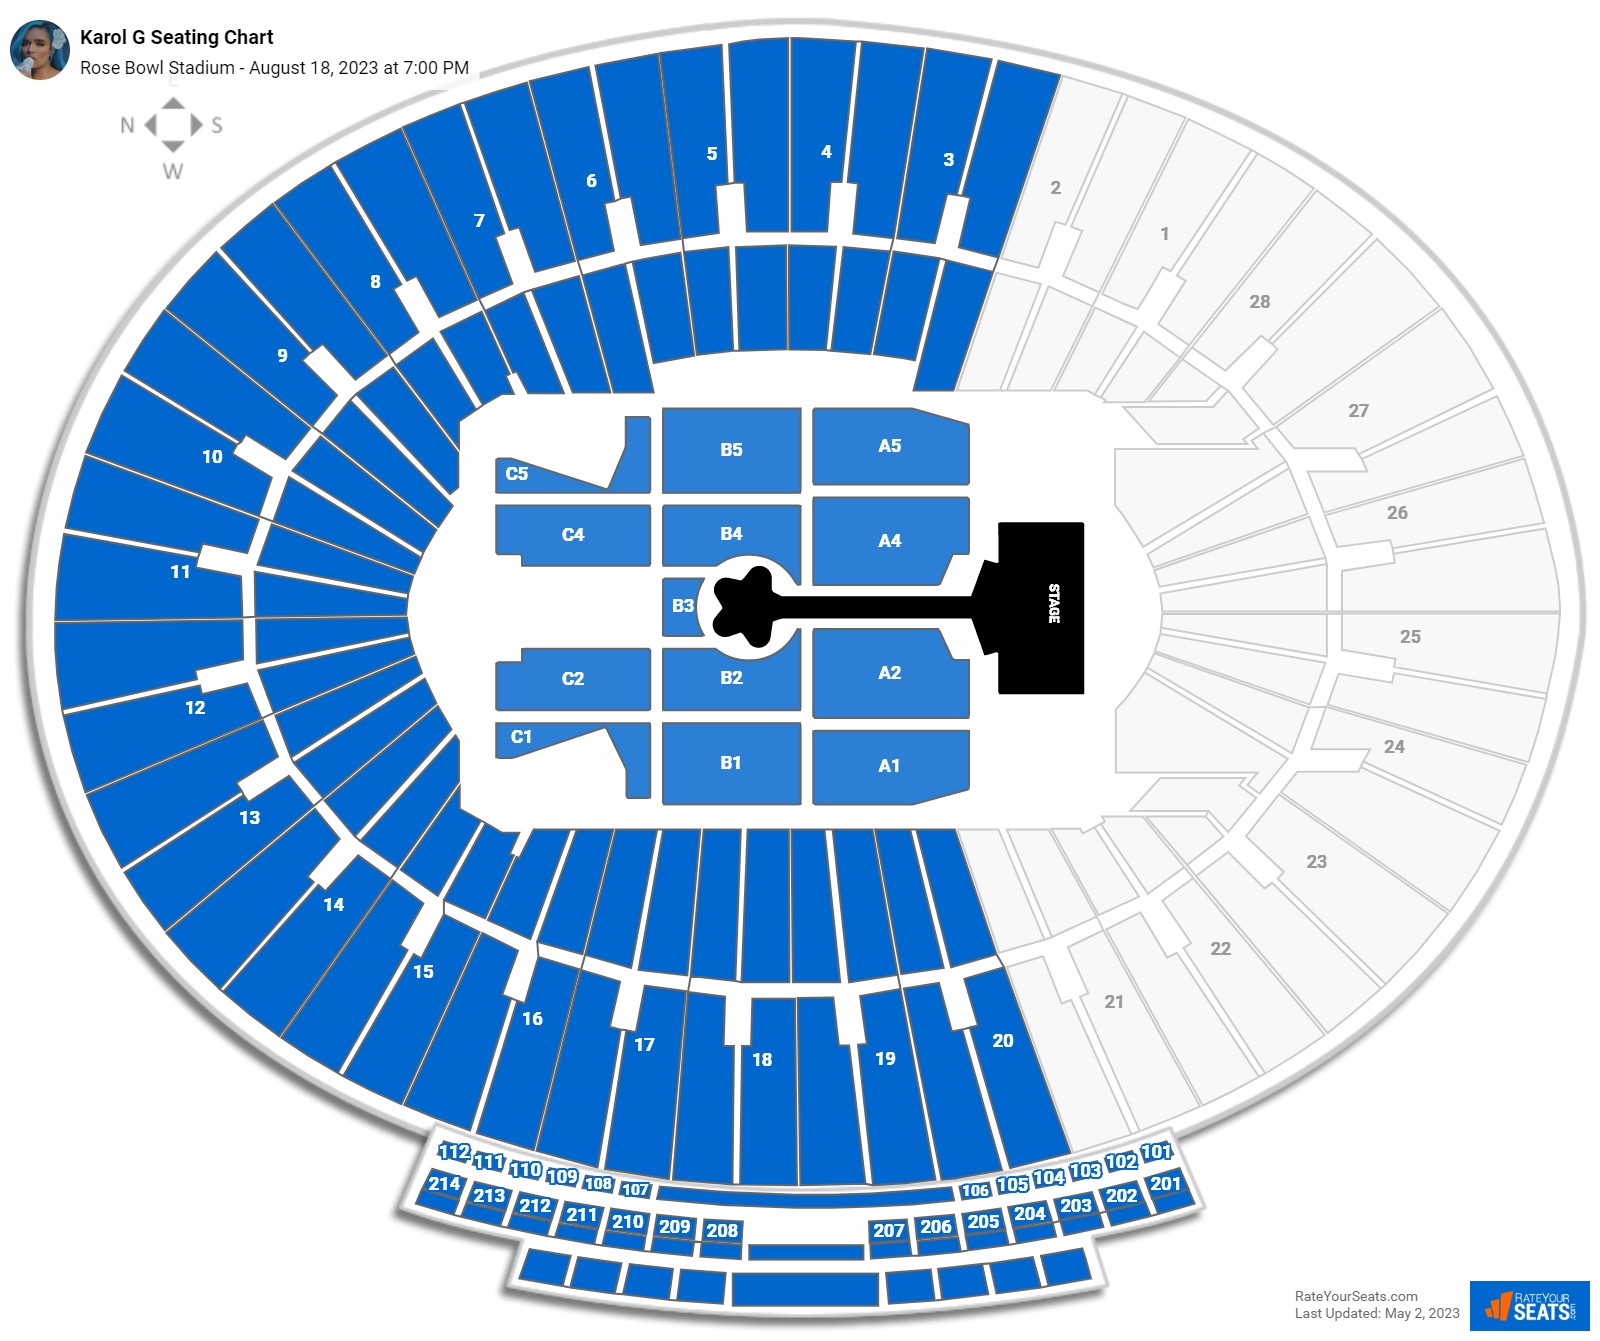 Rose Bowl Stadium Concert Seating Chart